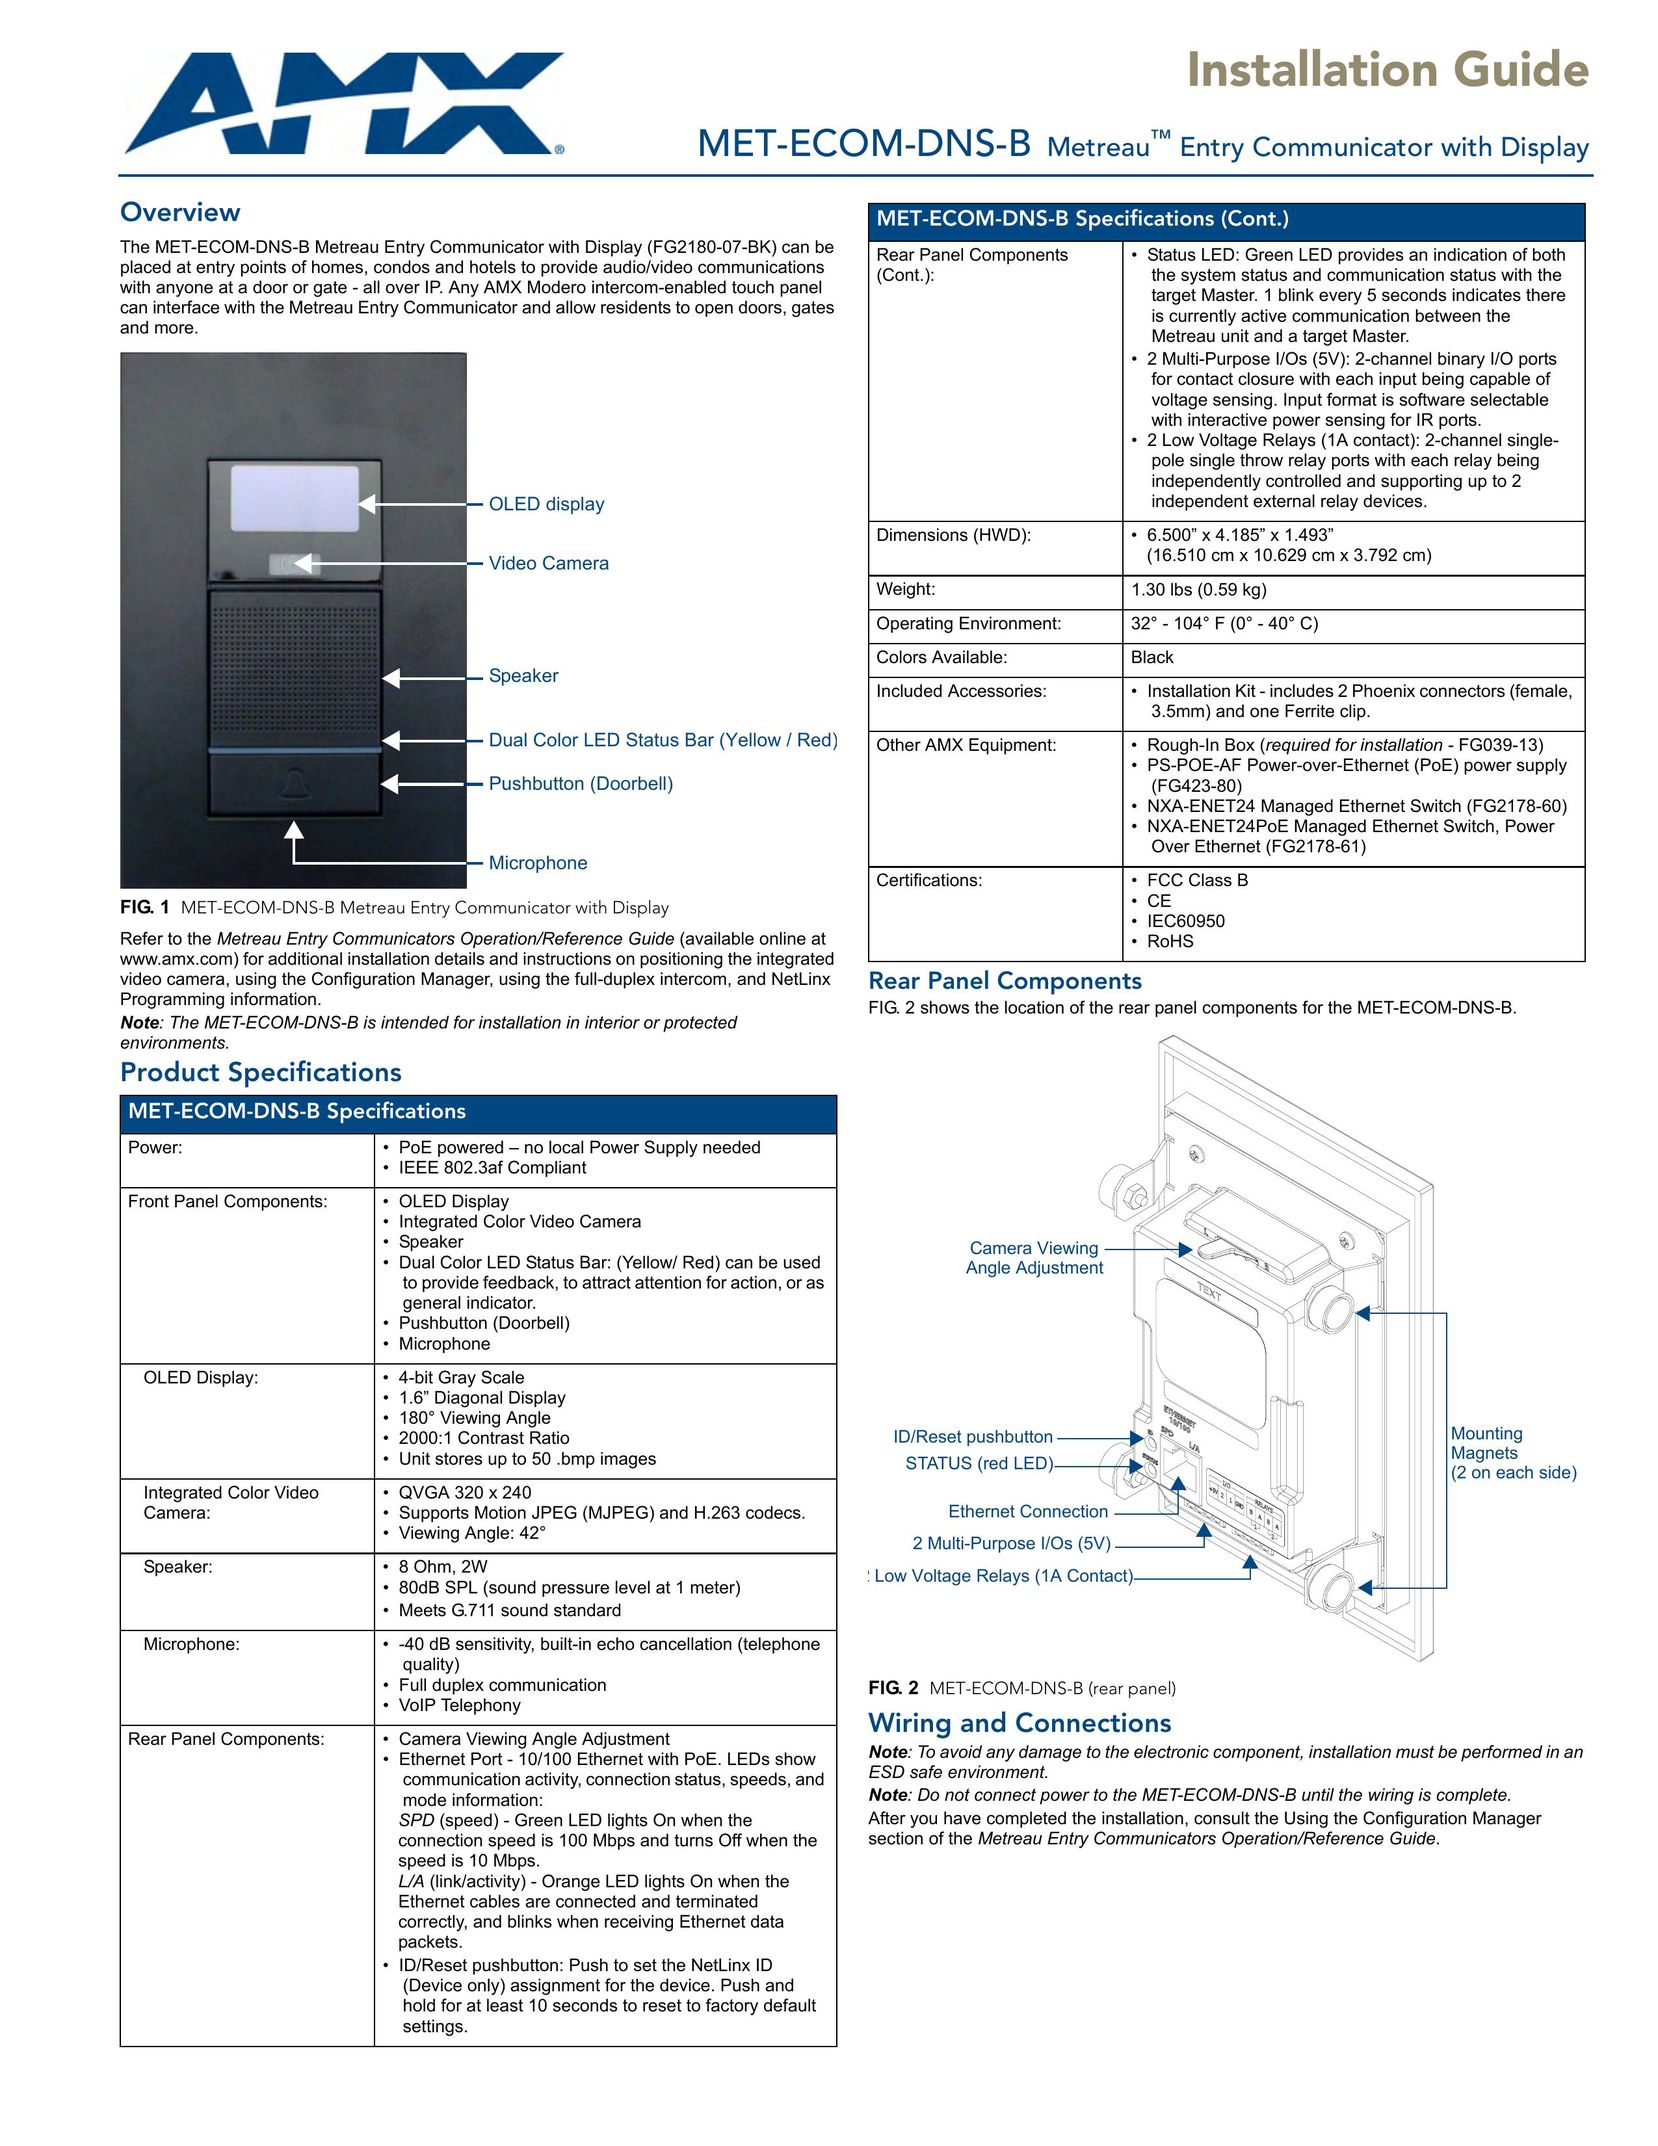 AMX MET-ECOM-DNS-B Home Security System User Manual